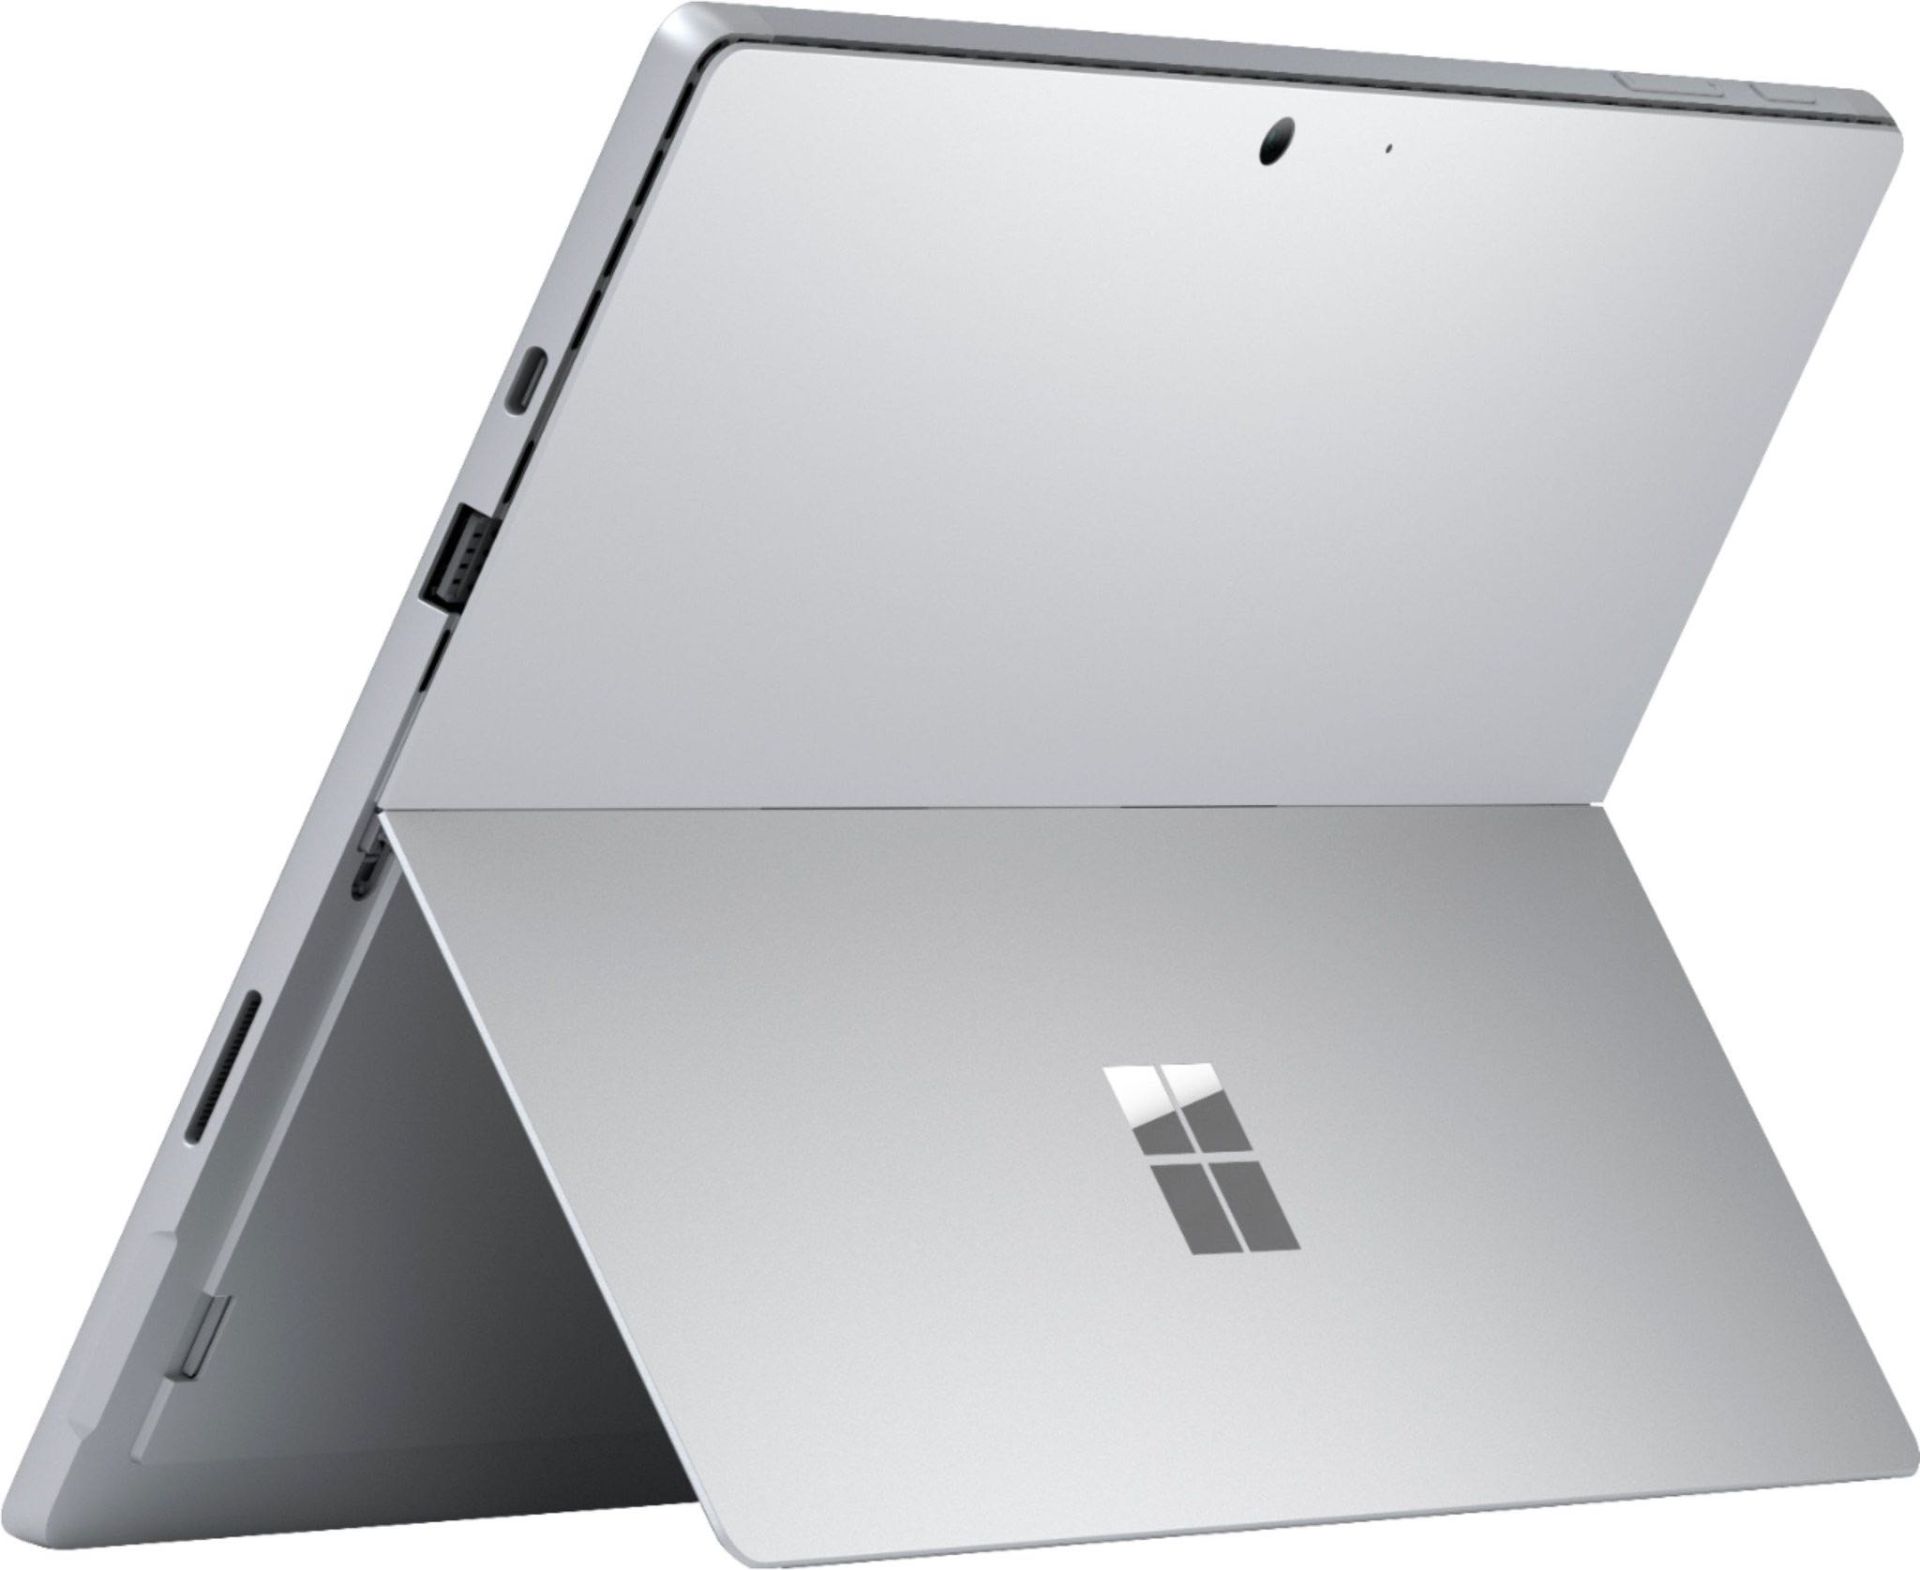 مایکروسافت سرفیس پرو 7 / Microsoft Surface Pro 7